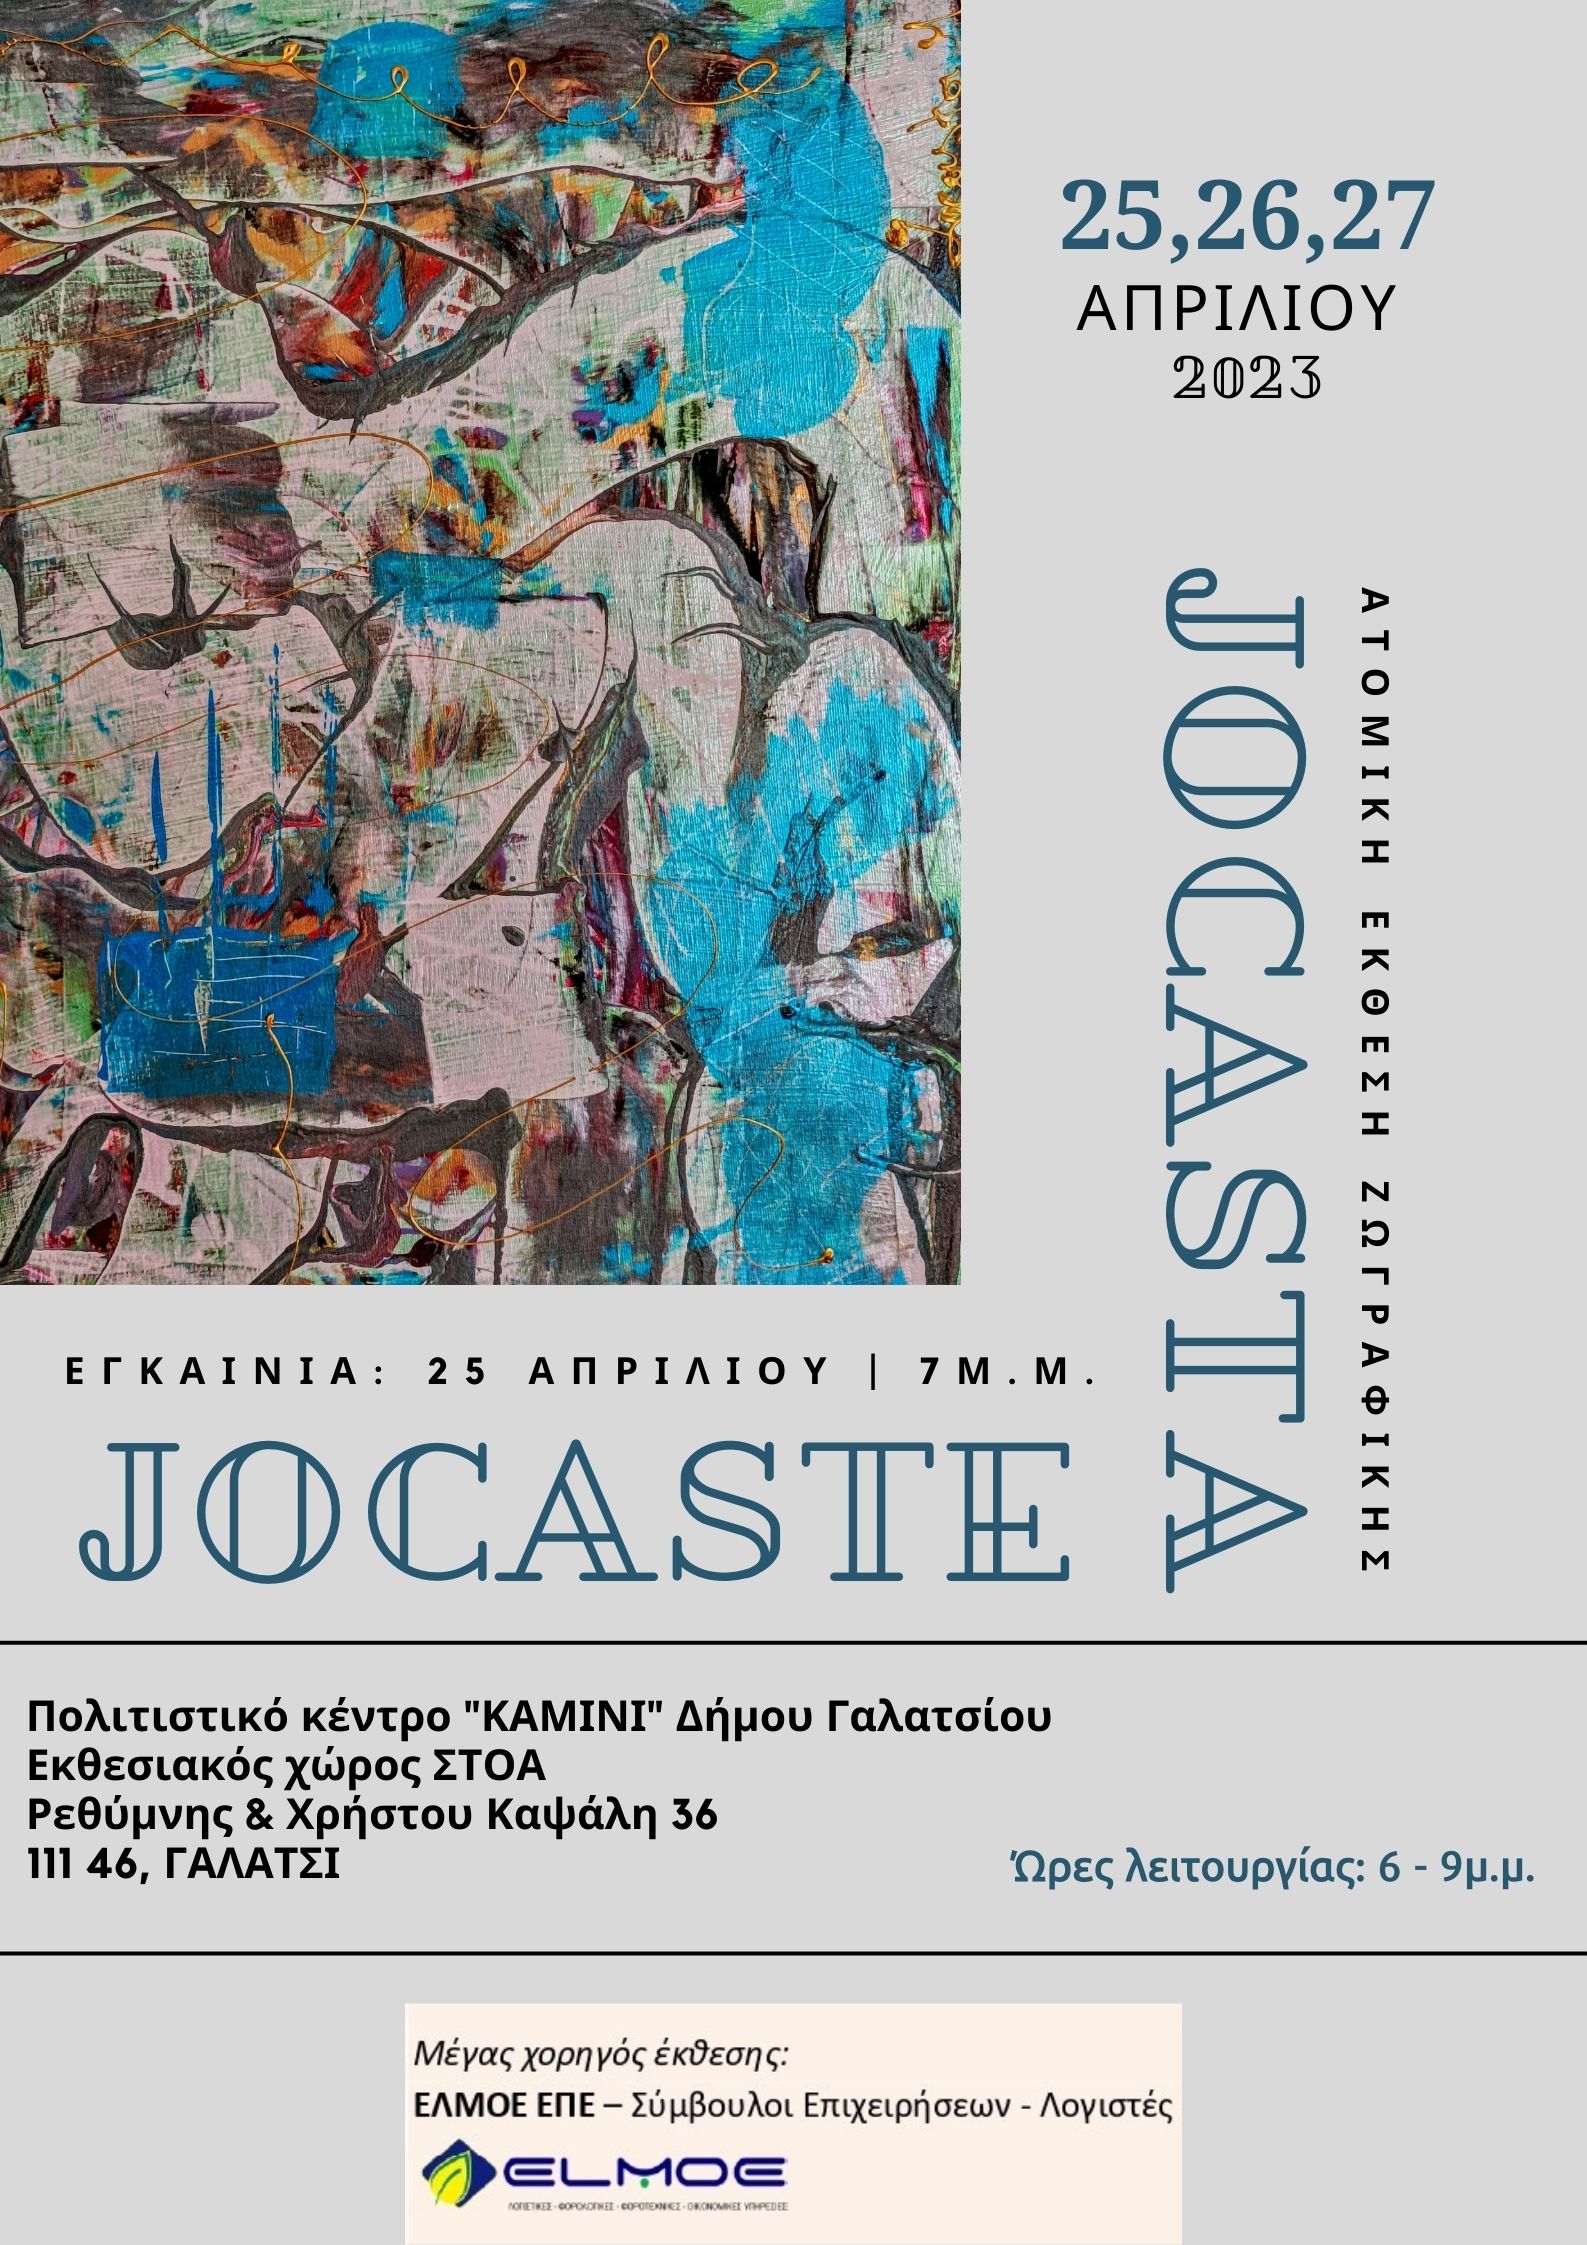 JOCASTA JOCASTE: Ατομική Έκθεση Ζωγραφικής, στο Πολιτιστικό Κέντρο ΚΑΜΙΝΙ του δήμου Γαλατσίου (εκθεσιακός χώρος ΣΤΟΑ)